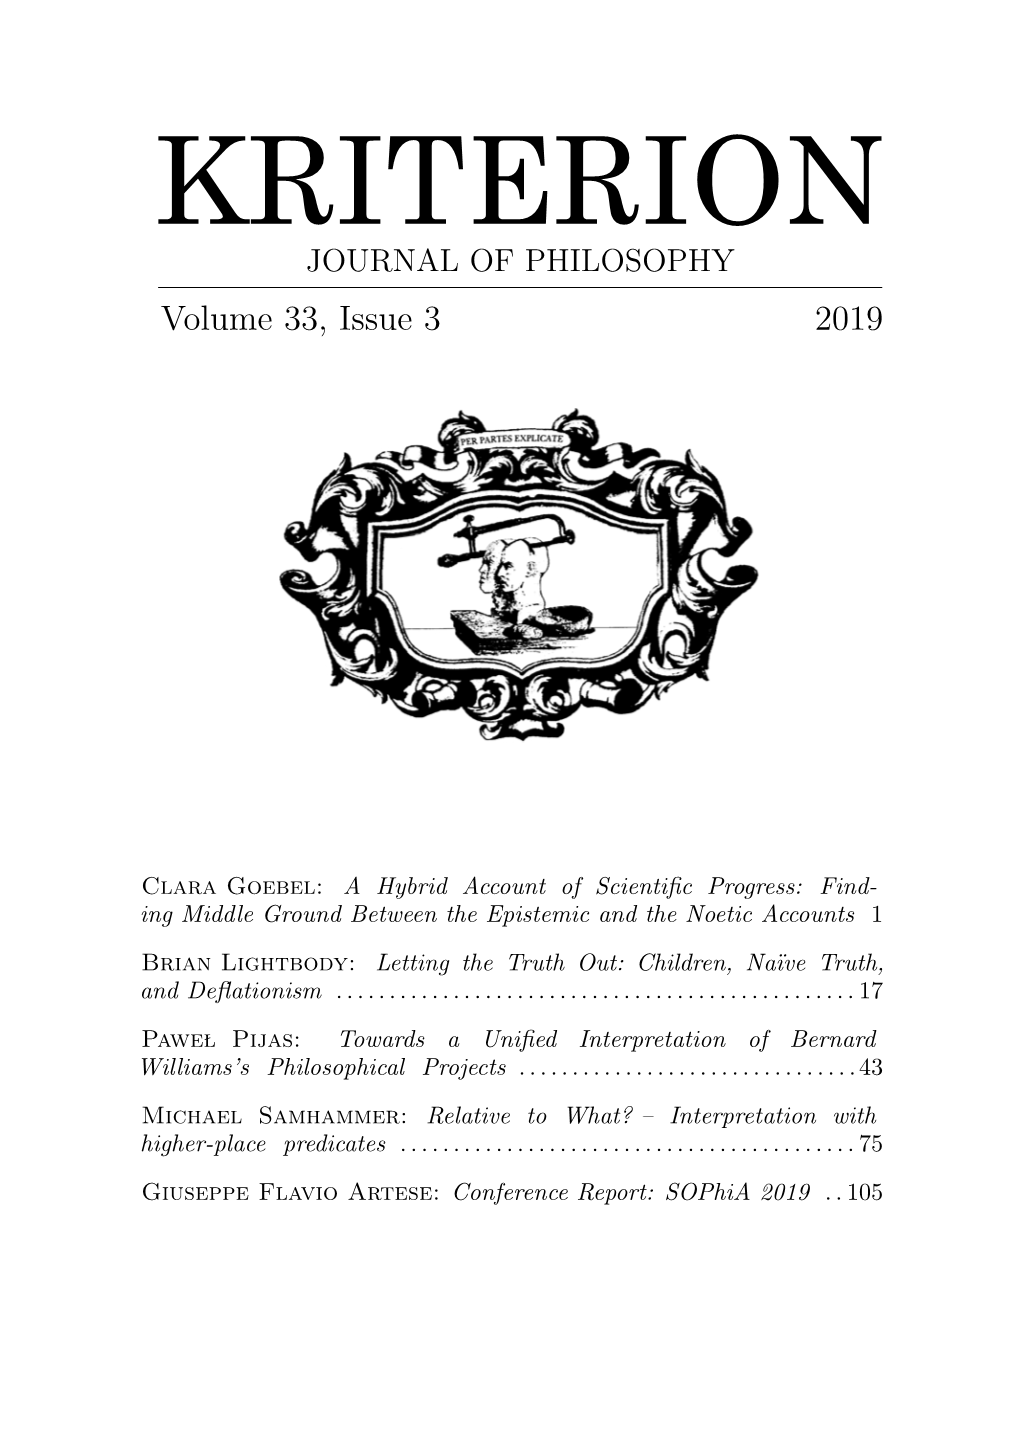 KRITERION | Journal of Philosophy